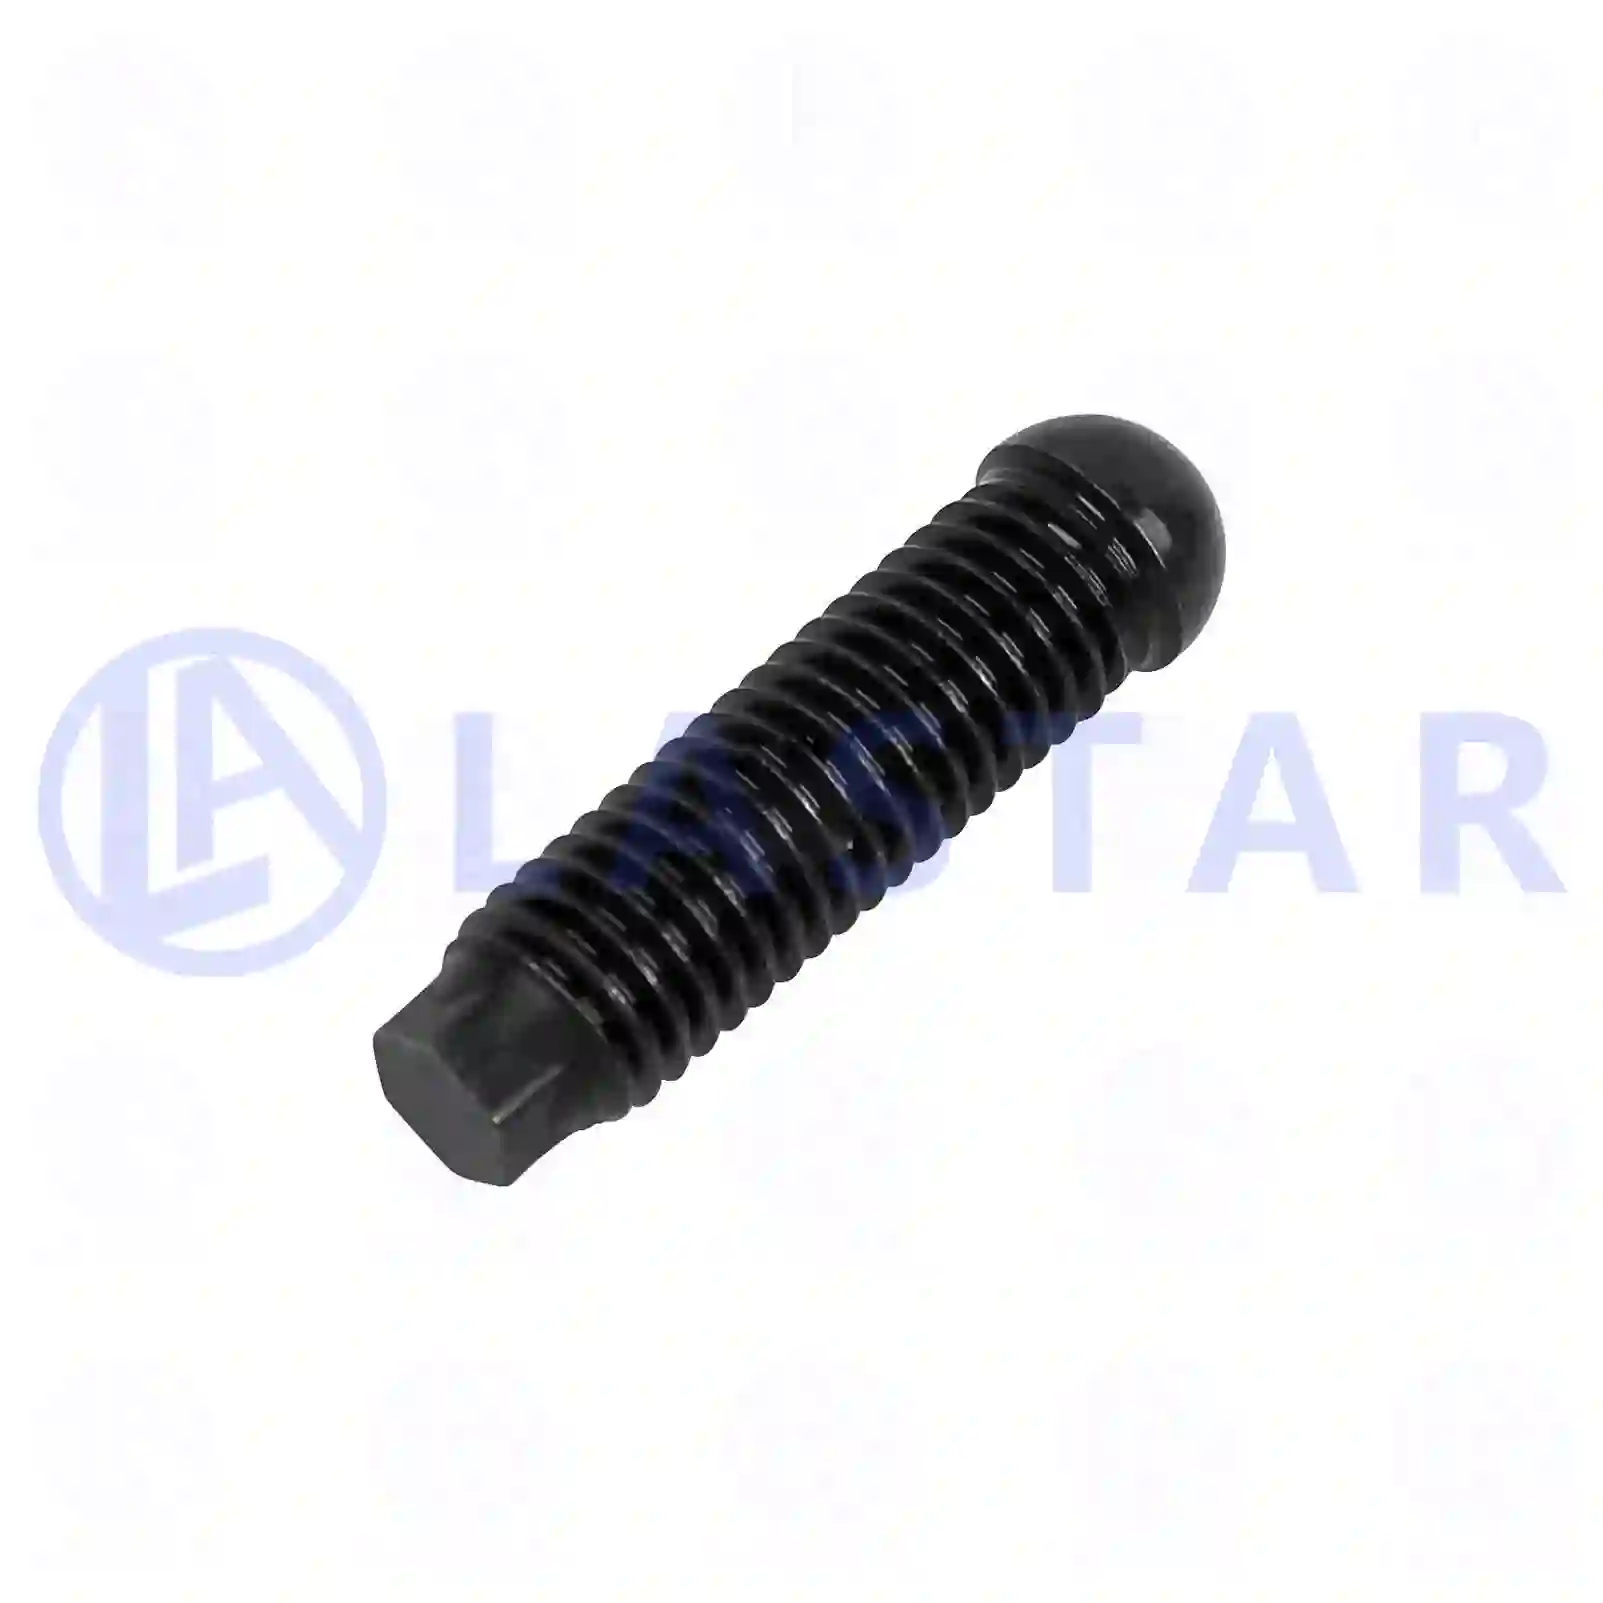  Cylinder Head Adjusting screw, la no: 77704097 ,  oem no:1408646, 1481810, 275036, ZG00805-0008 Lastar Spare Part | Truck Spare Parts, Auotomotive Spare Parts